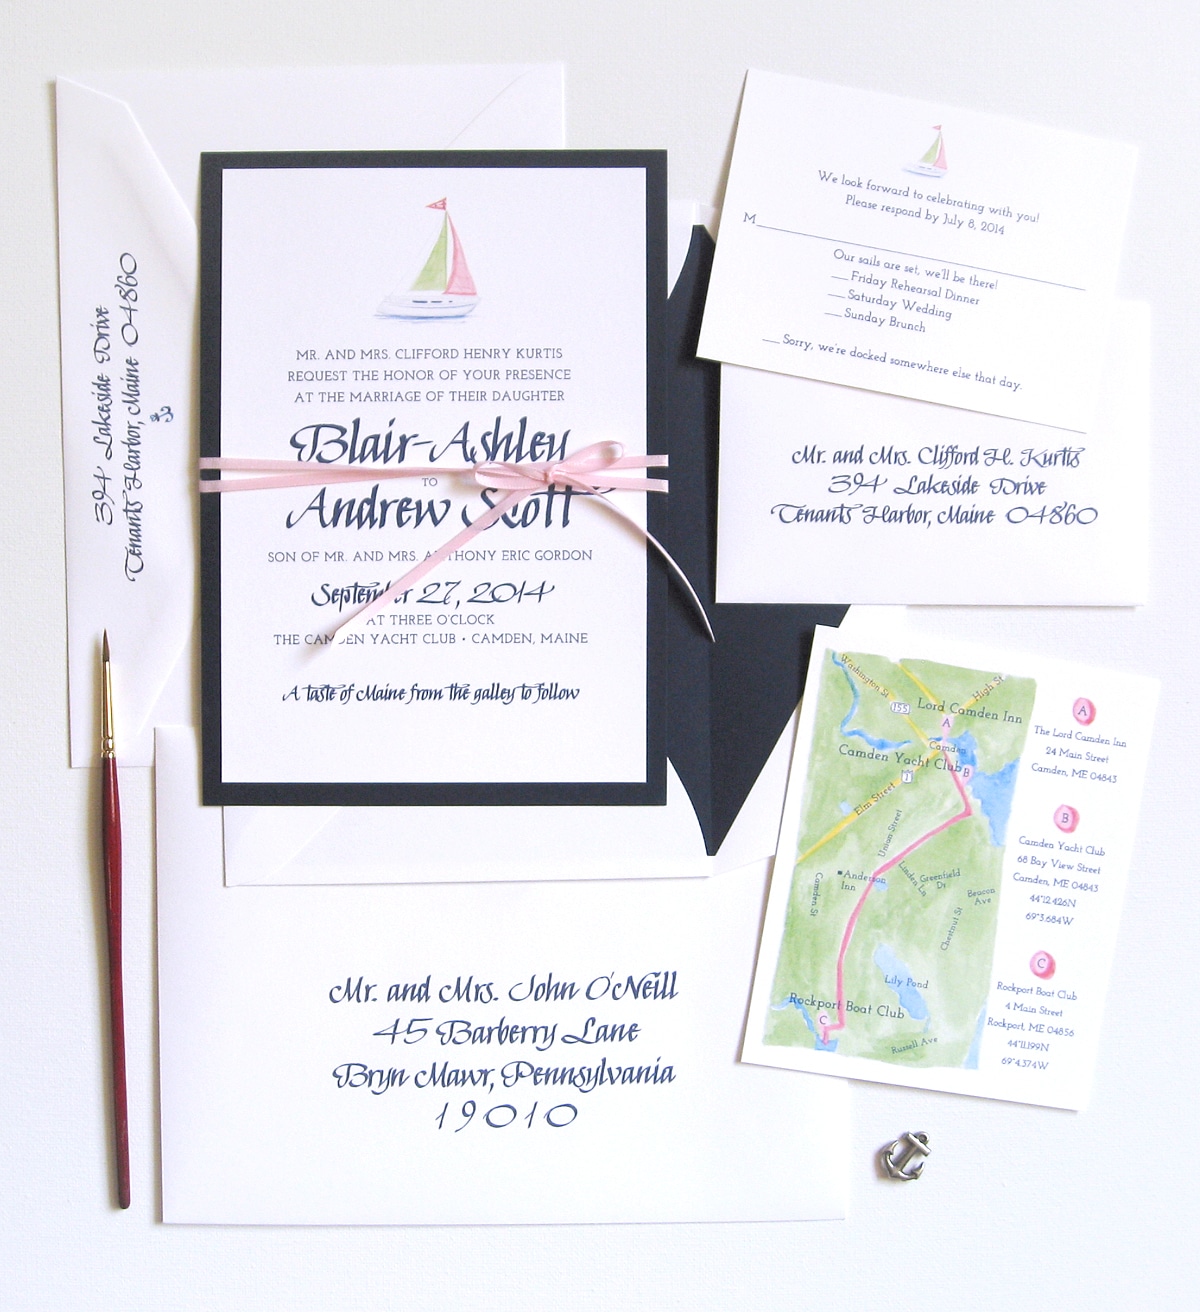 27 Sea-worthy Nautical Wedding Invitations. Watercolor sailboat nautical layered handmade wedding invitations by artist Michelle Mospens. | Mospens Studio